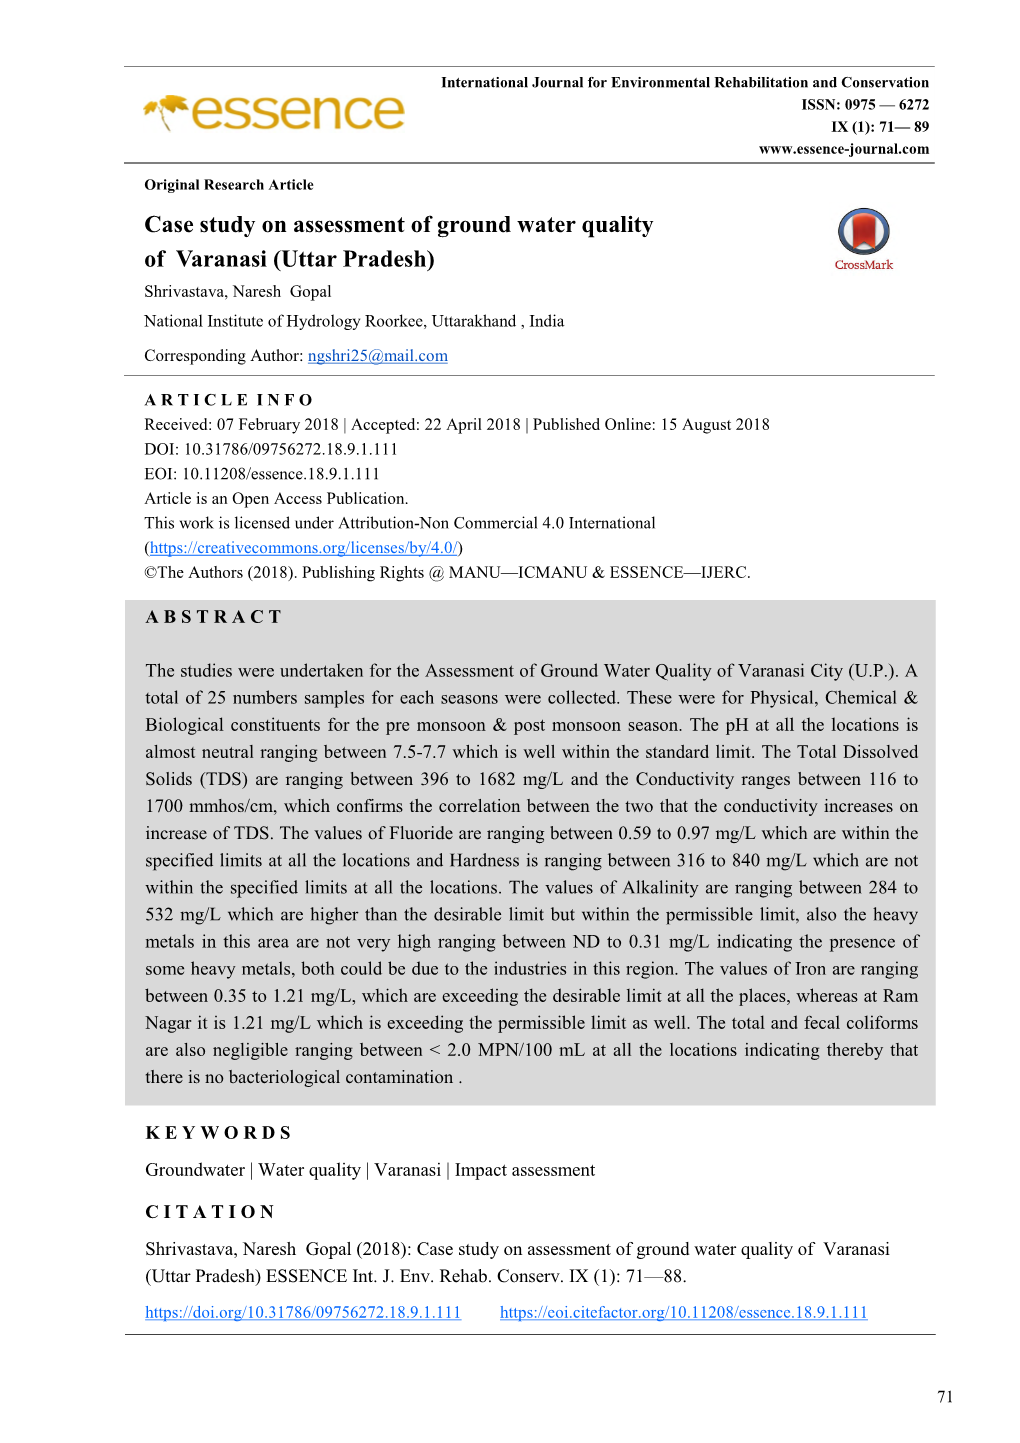 Case Study on Assessment of Ground Water Quality of Varanasi (Uttar Pradesh) Shrivastava, Naresh Gopal National Institute of Hydrology Roorkee, Uttarakhand , India